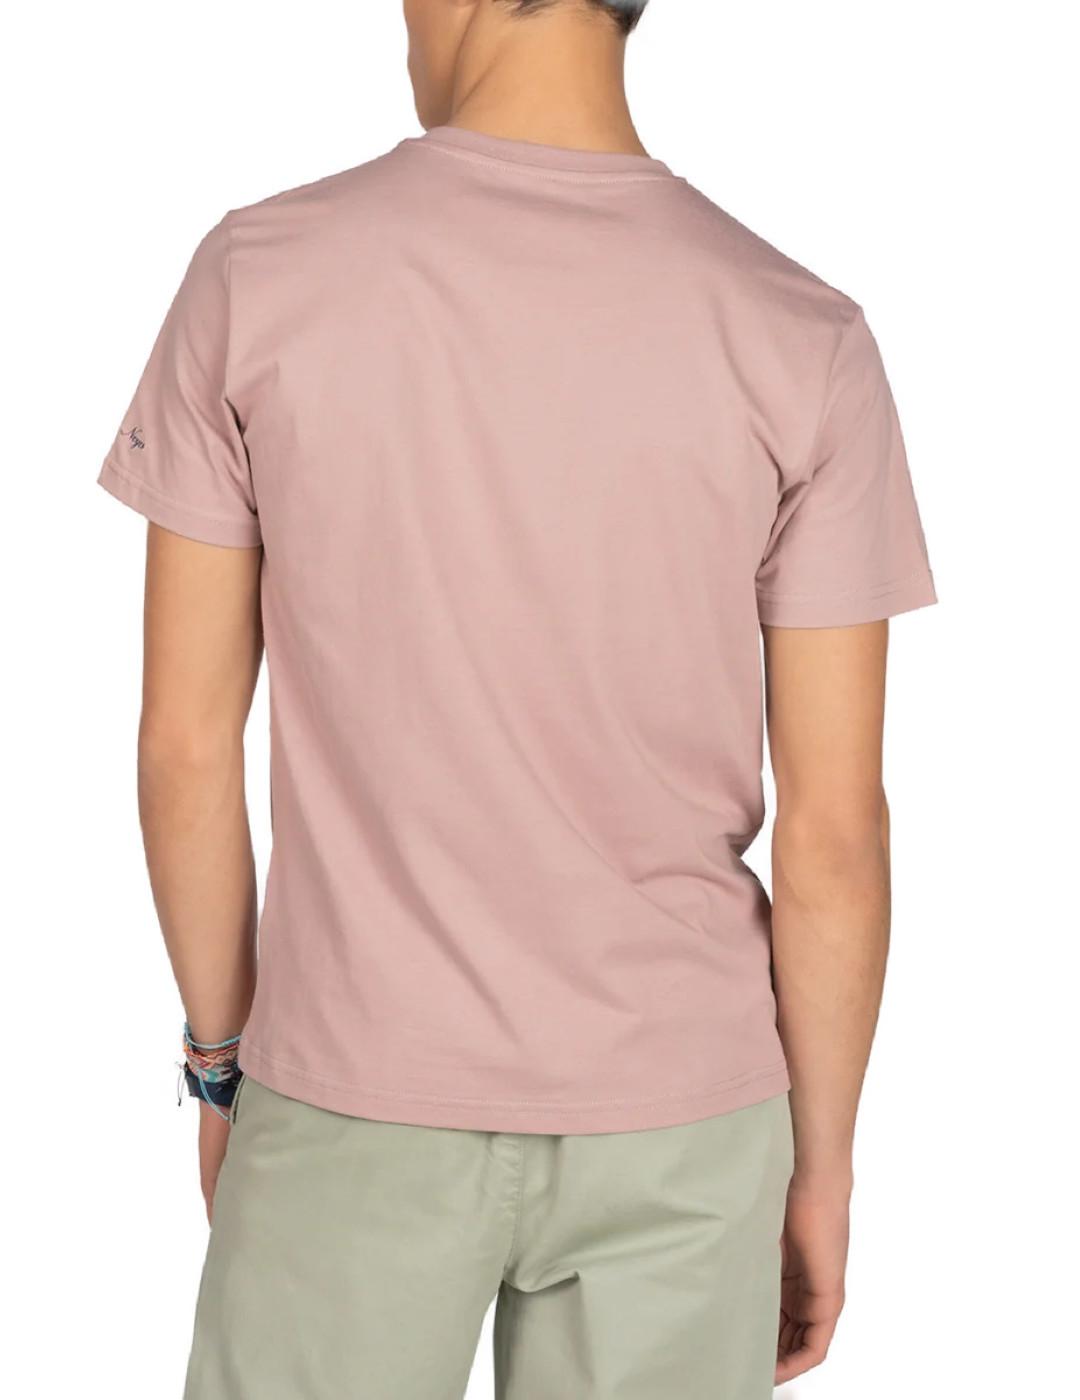 Camiseta Harper Paradise rosa manga corta para hombre